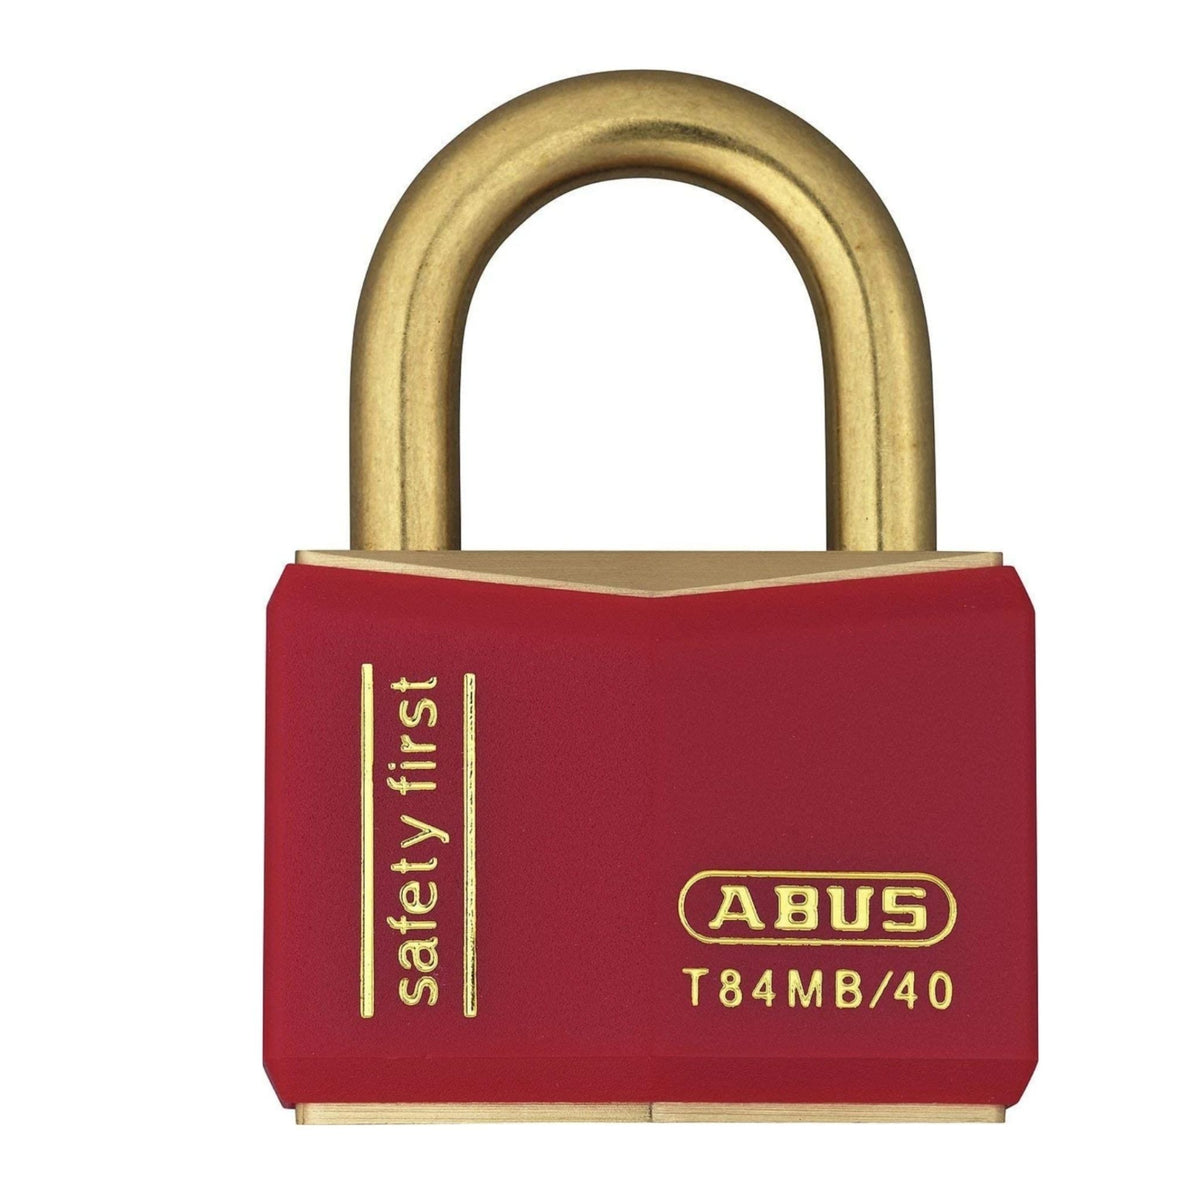 Abus T84MB/40 B KA Red Weatherproof Brass Padlock - The Lock Source